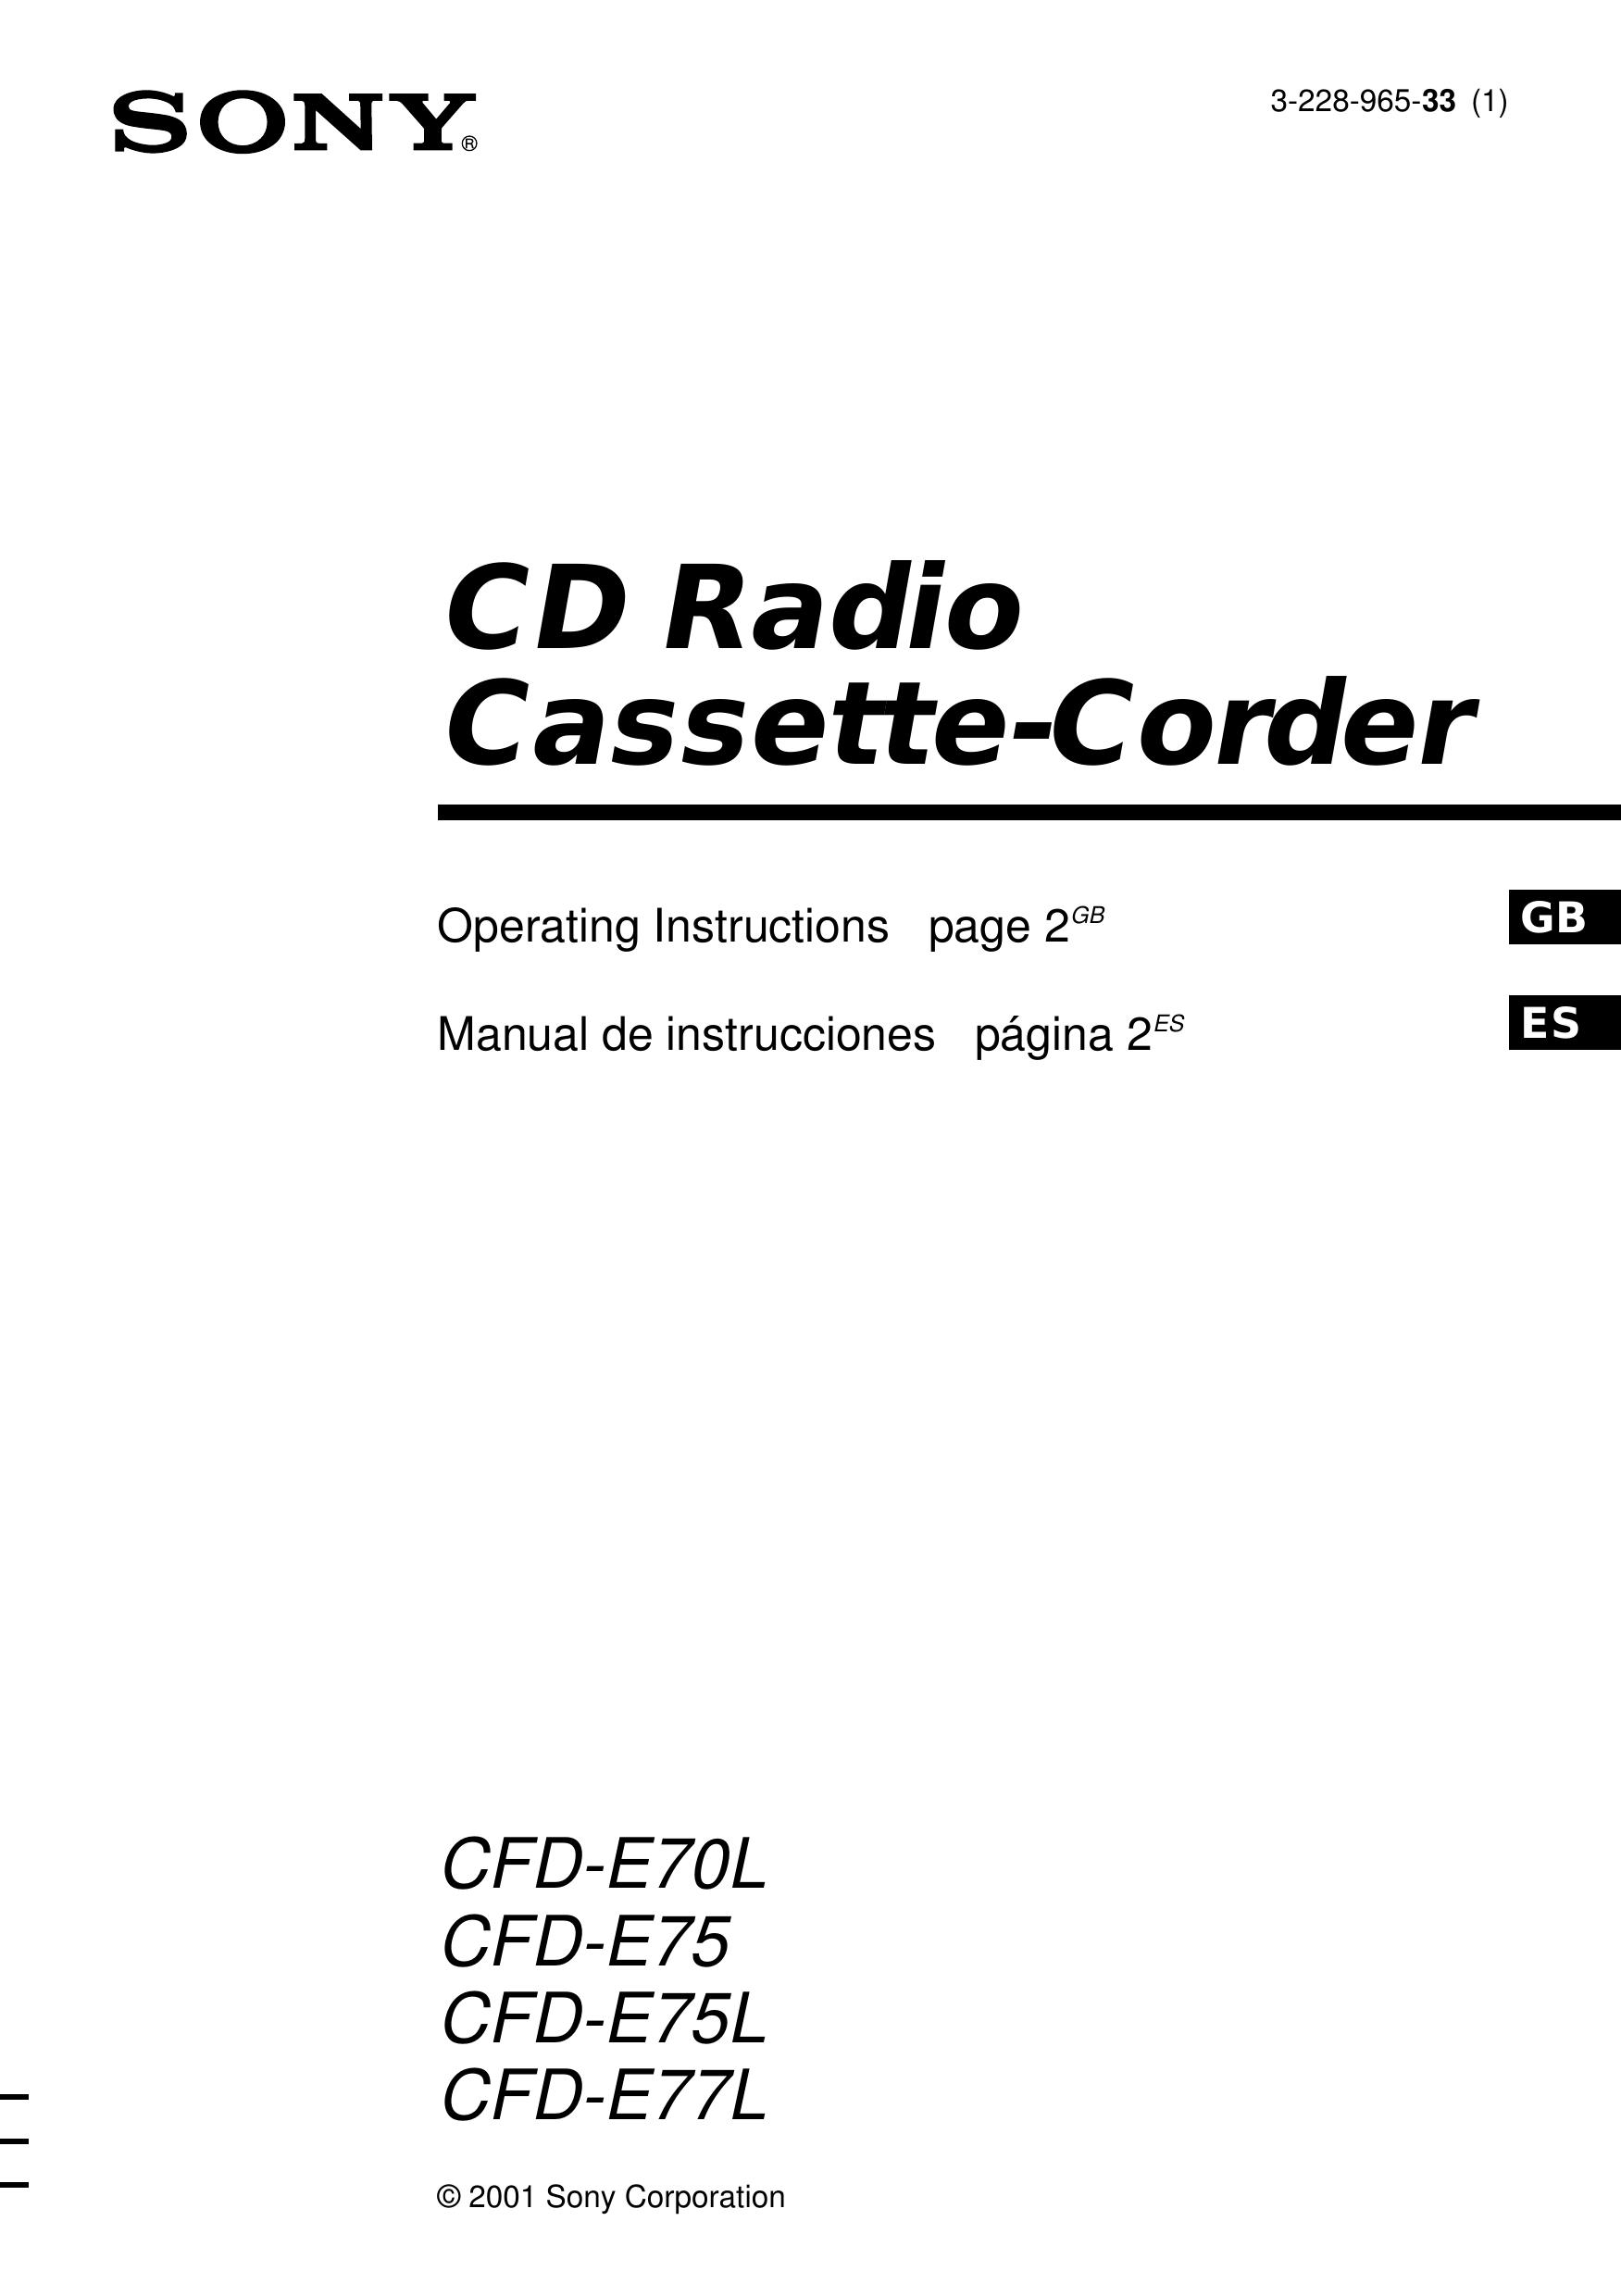 Sony CFD-E77L Clock Radio User Manual